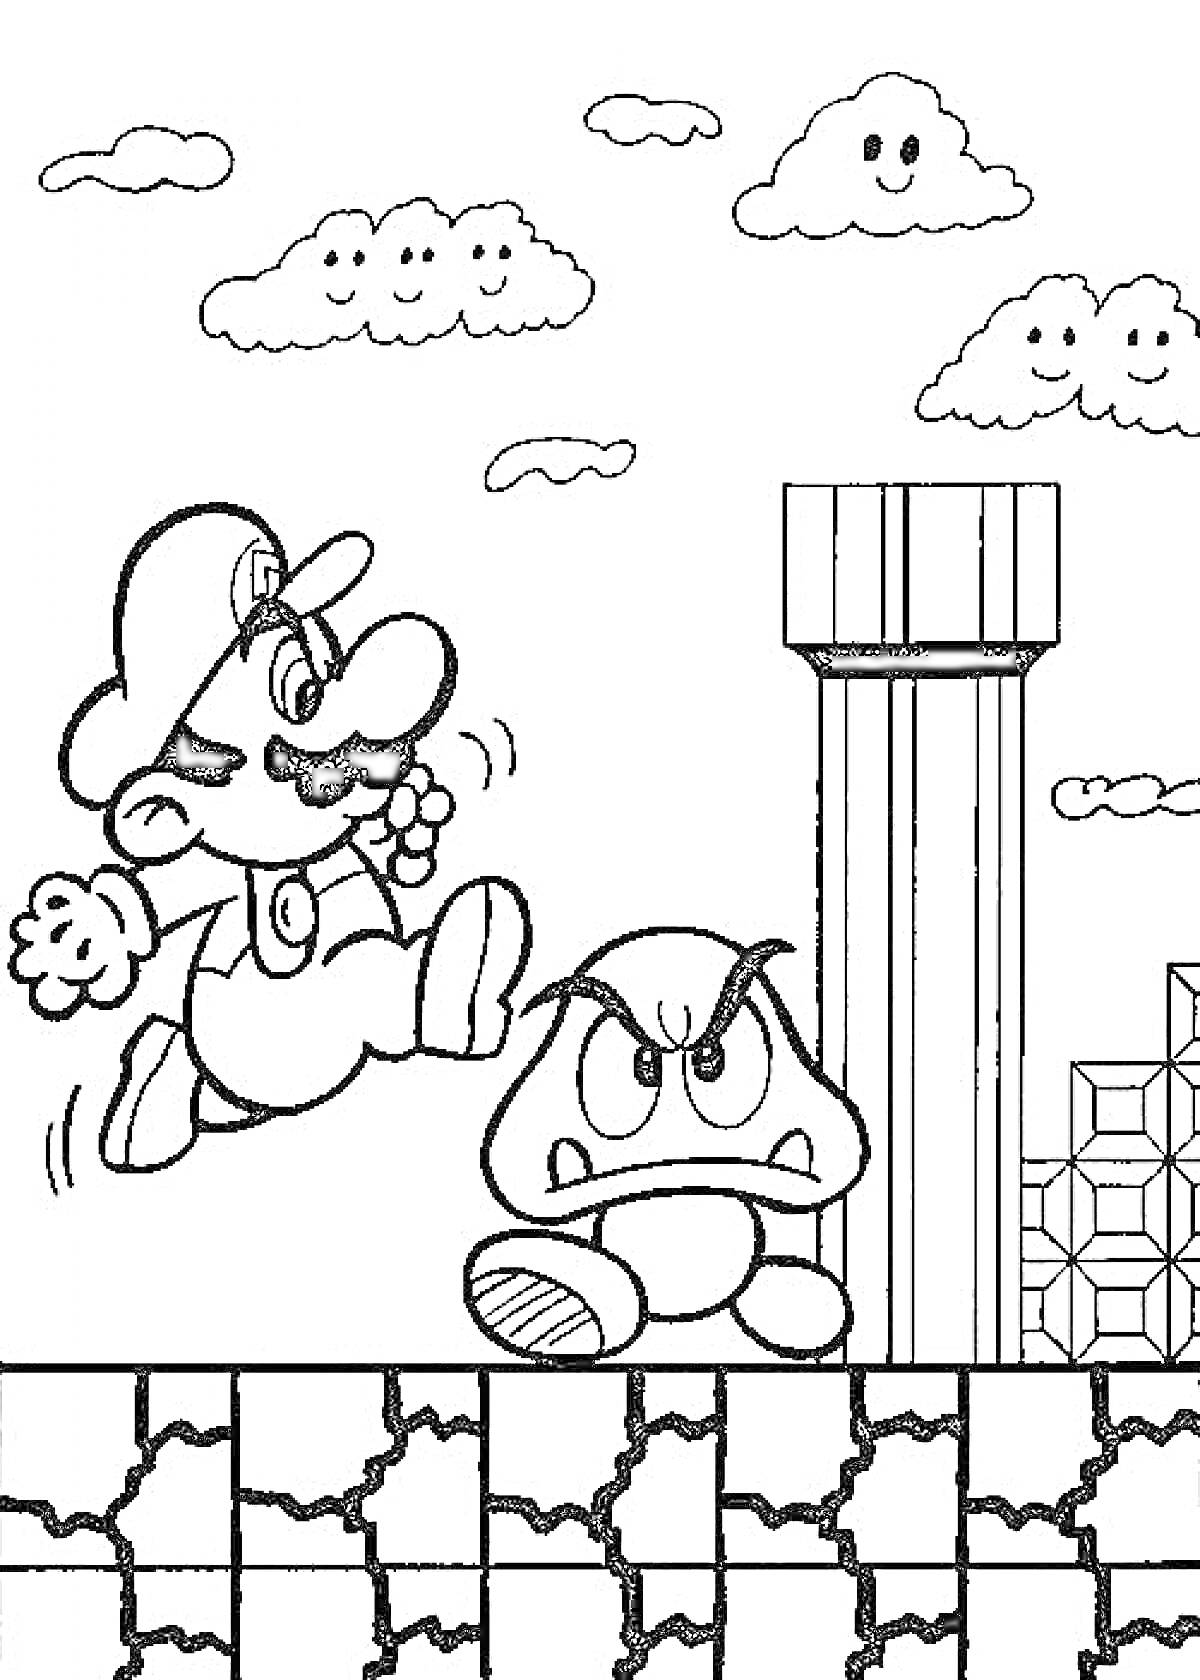 Марио прыгает через Гумба и блоки на платформе с облаками на заднем плане